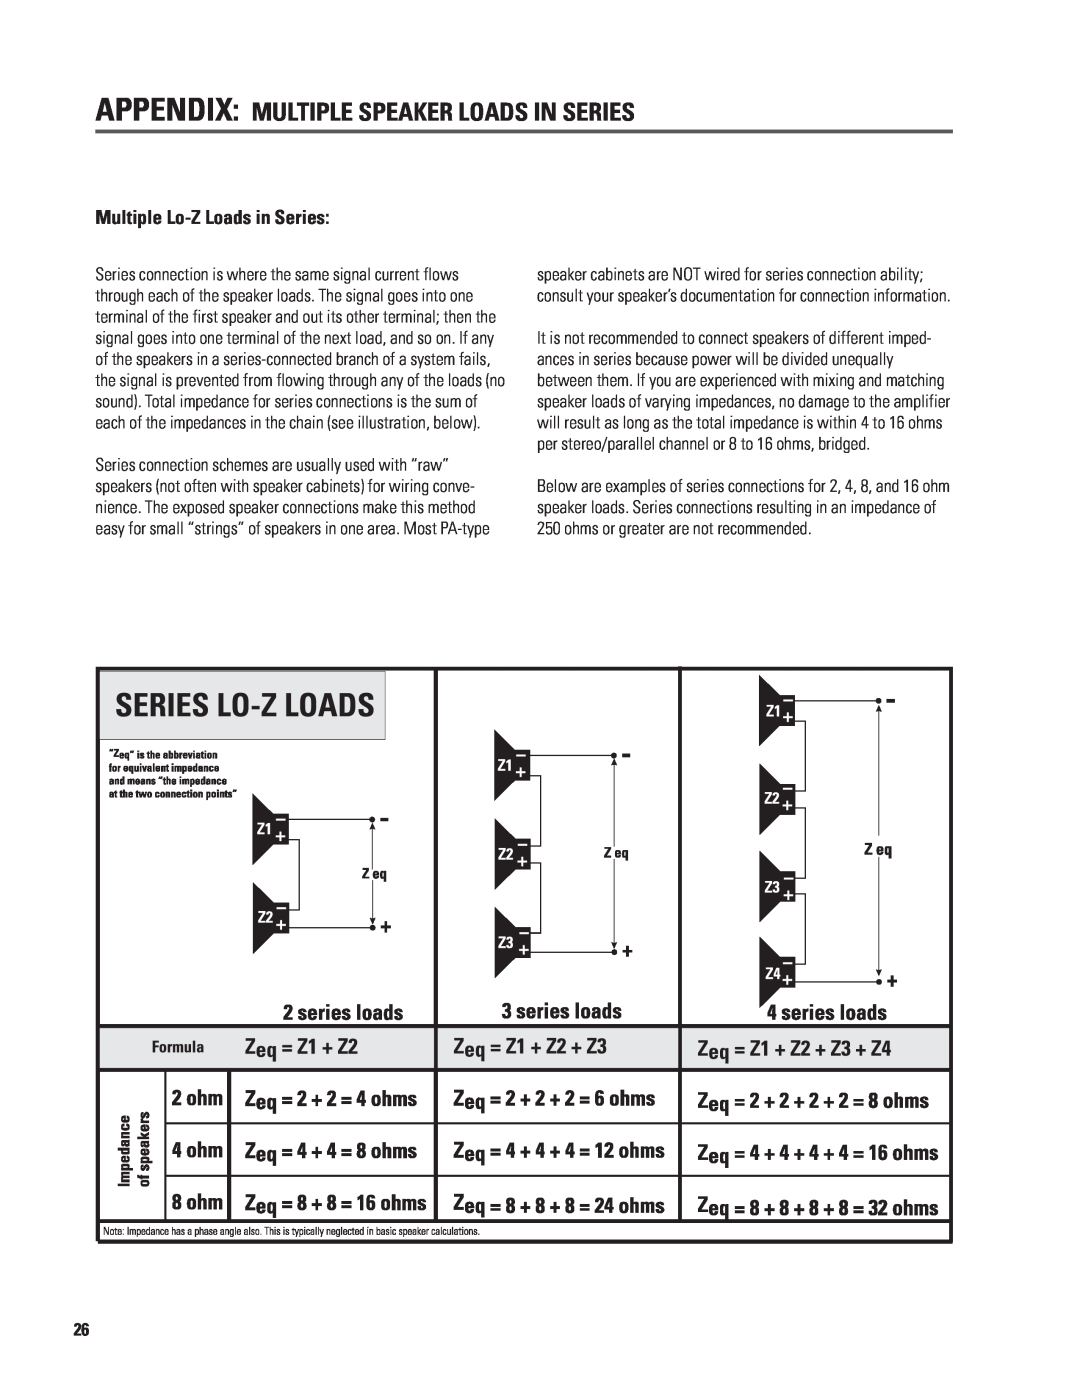 QSC Audio CX168 user manual Appendix Multiple Speaker Loads In Series, Multiple Lo-ZLoads in Series 